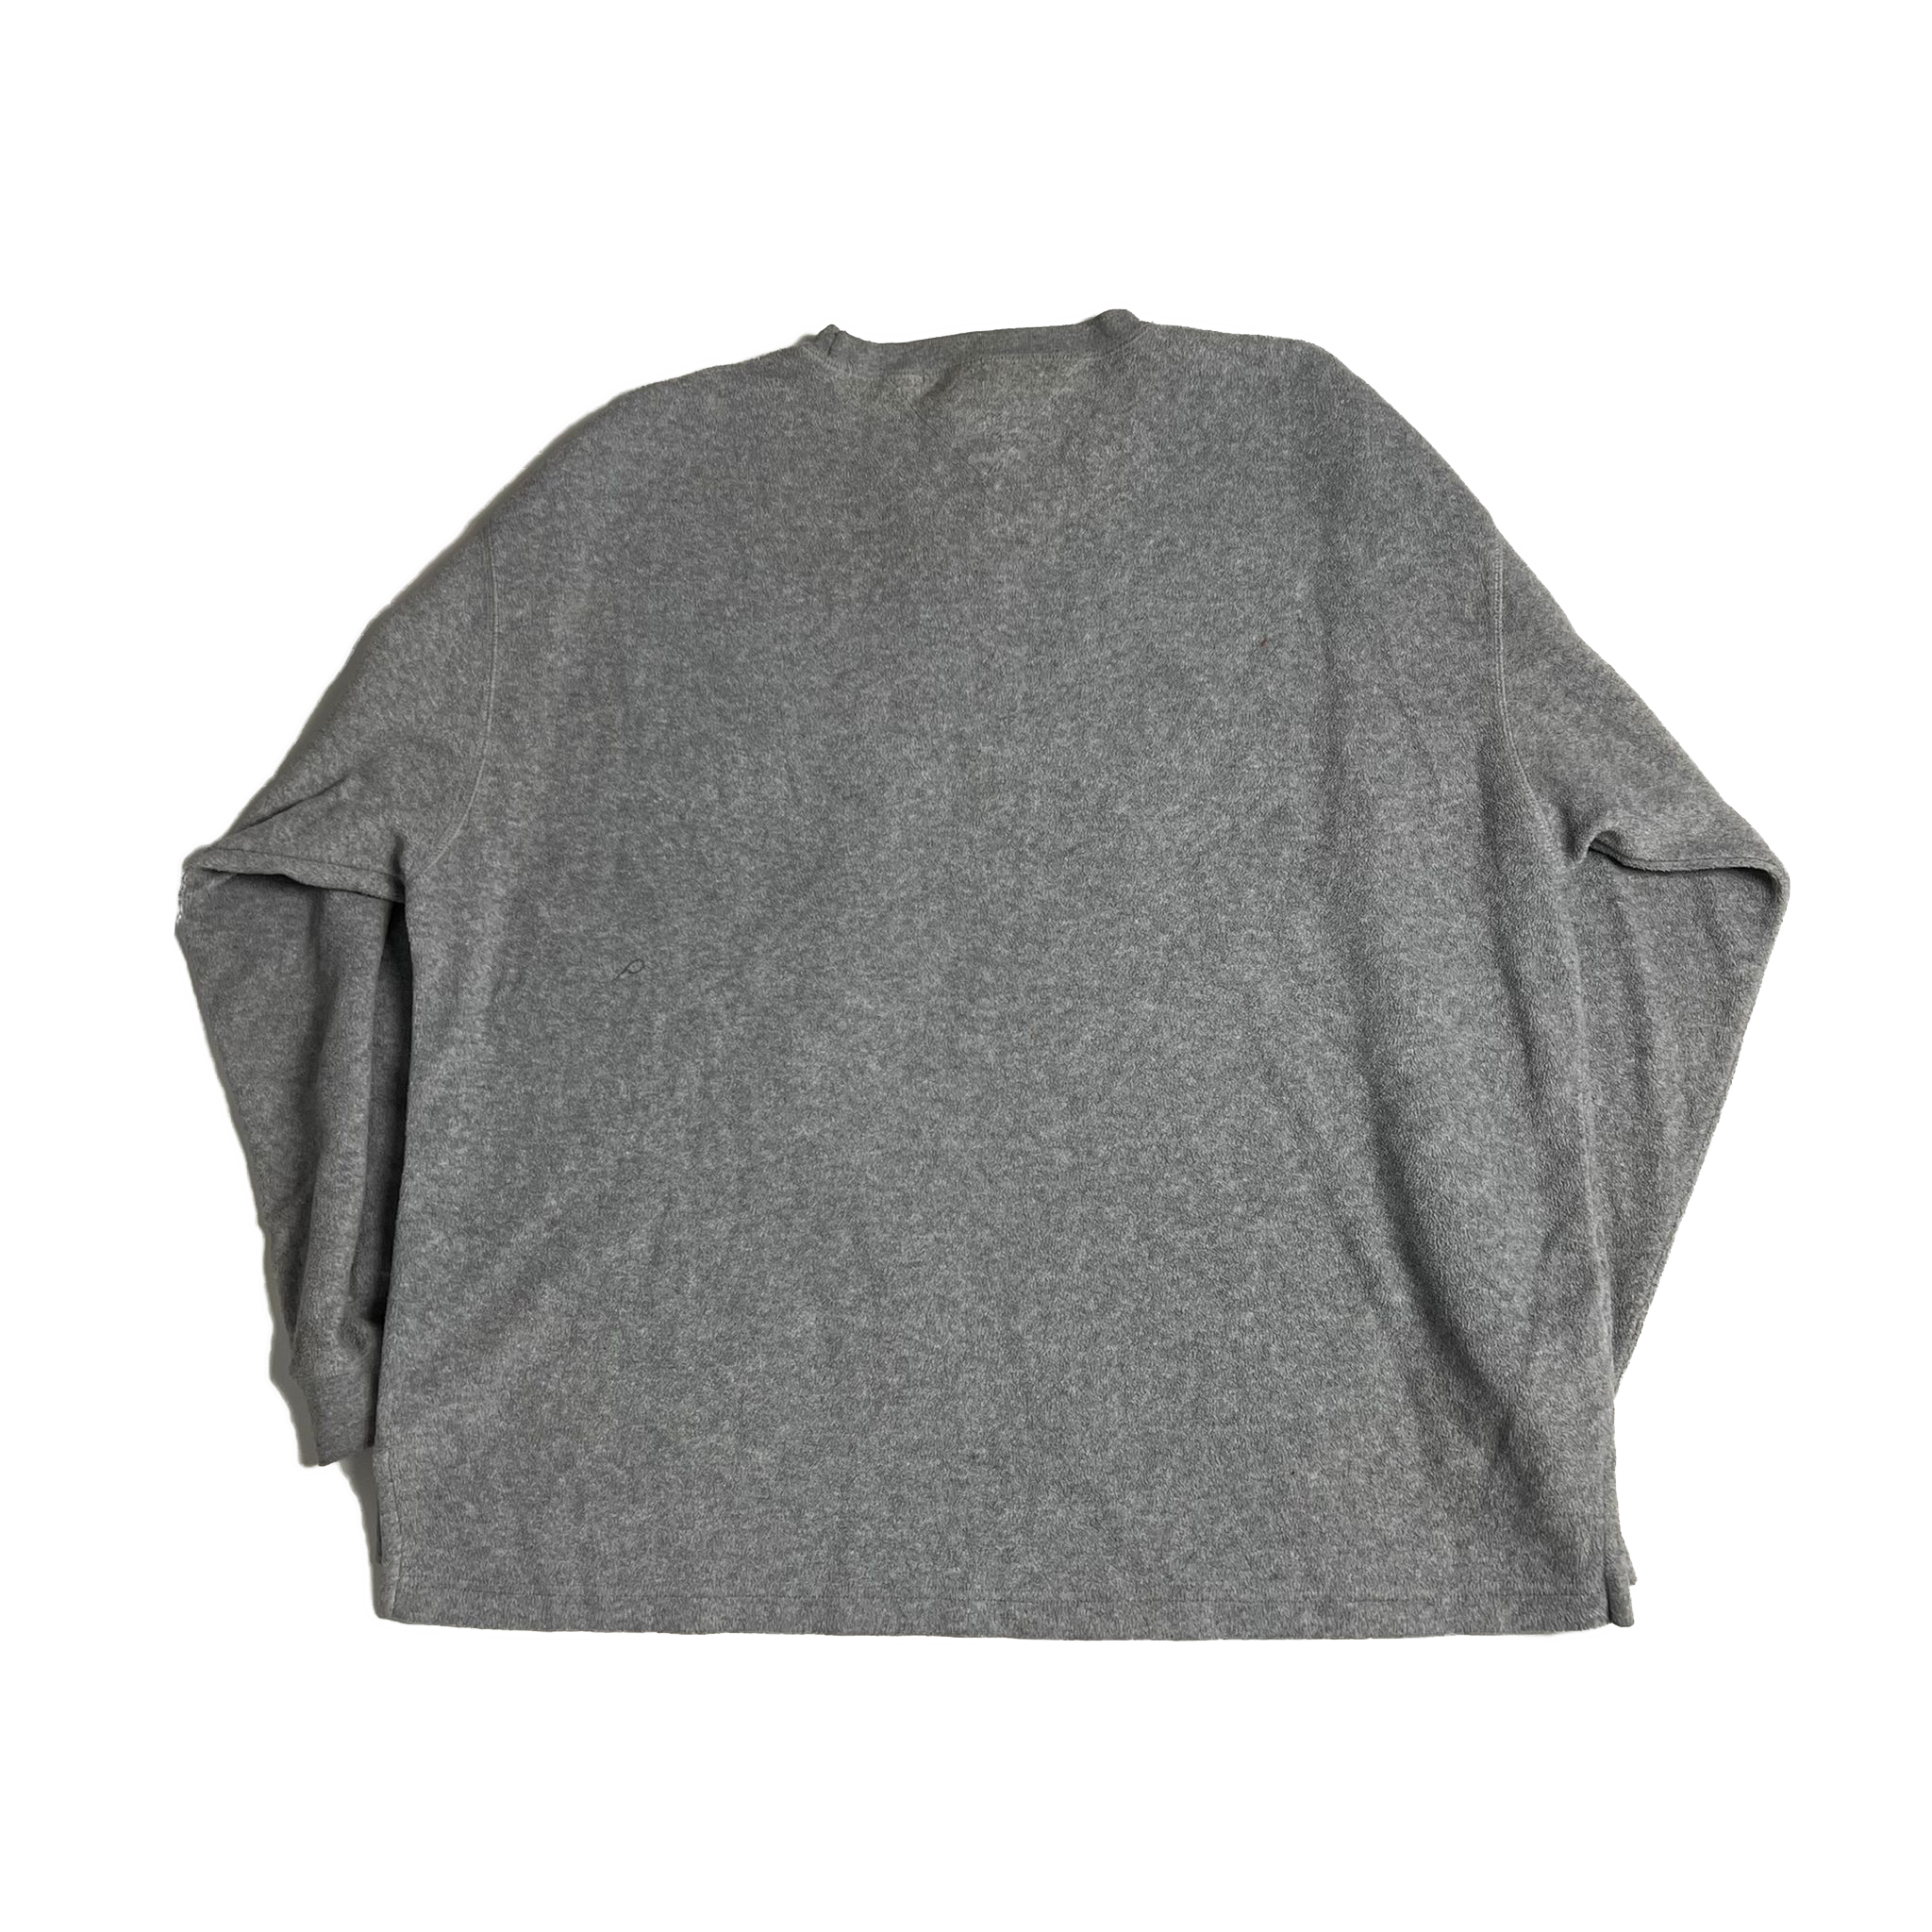 90's Tommy Hilfiger fleece sweatshirt